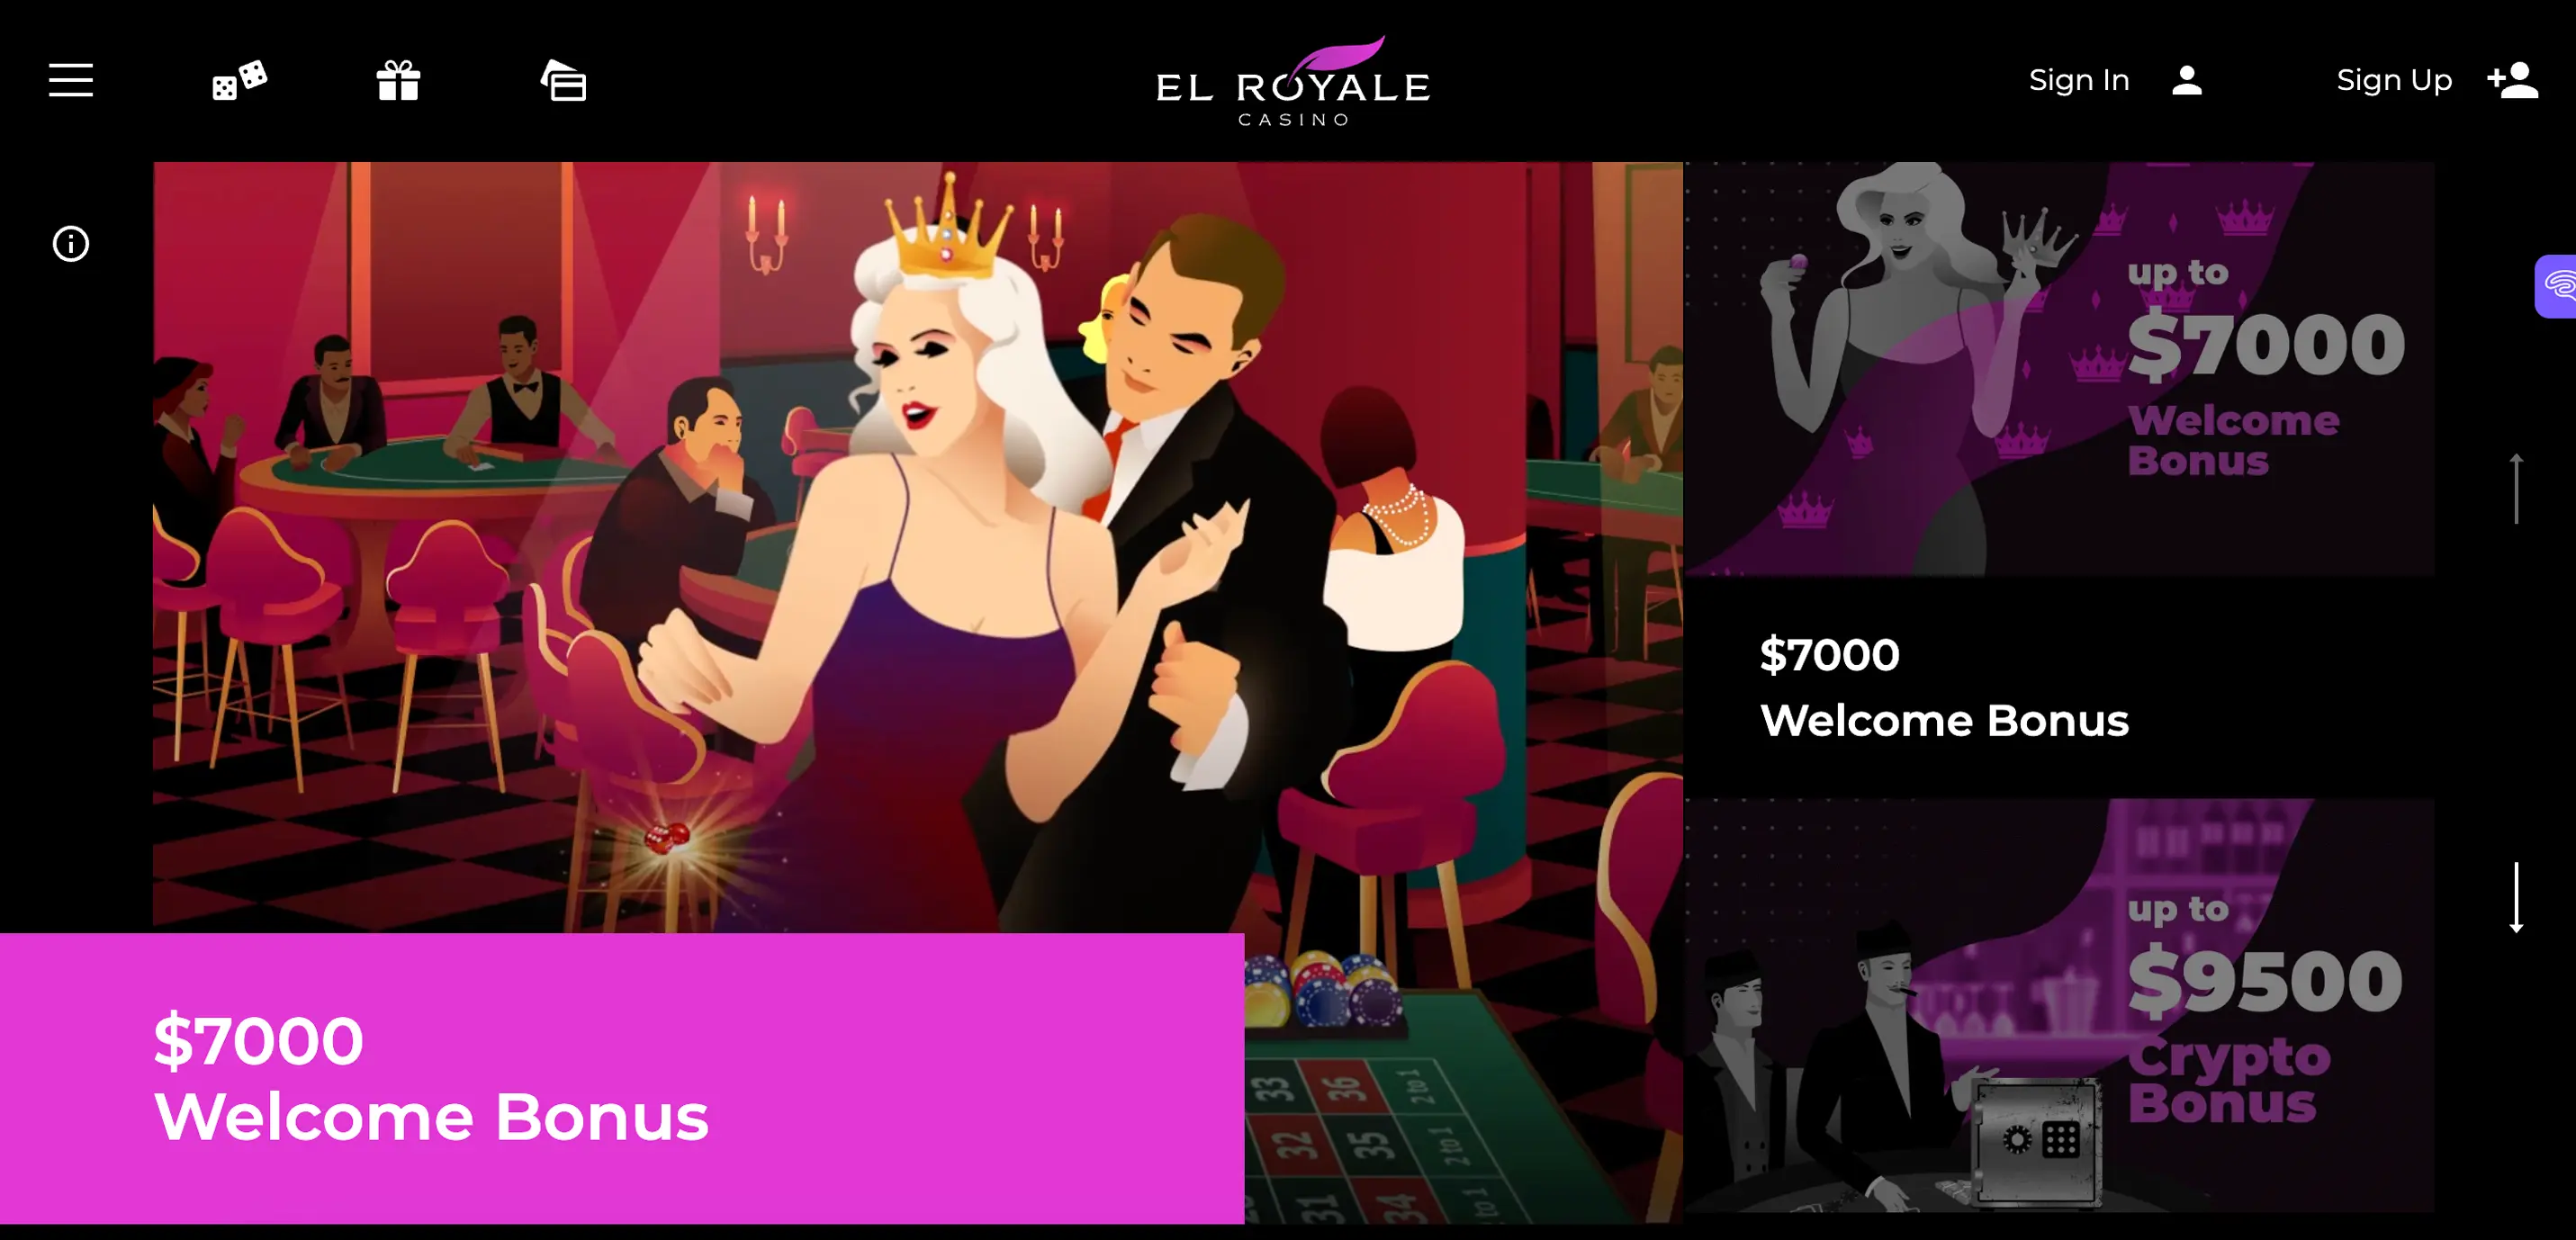 El Royale Online Casino Bonus